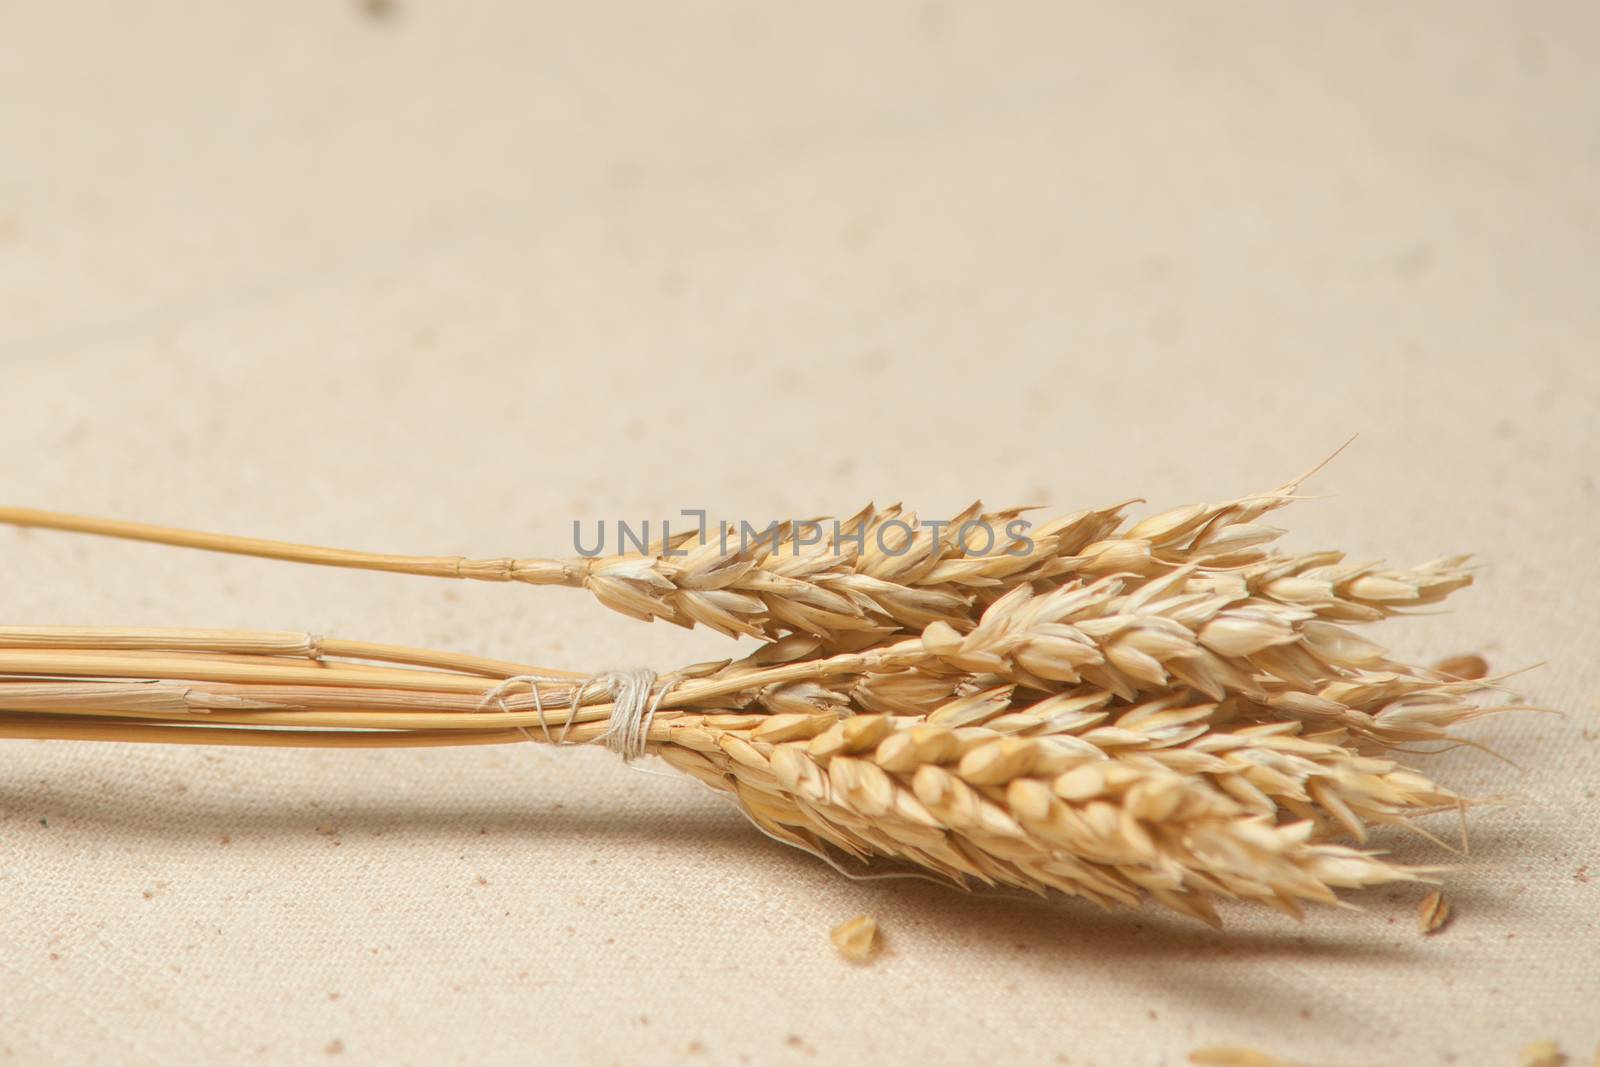 Wheat seed by kozak